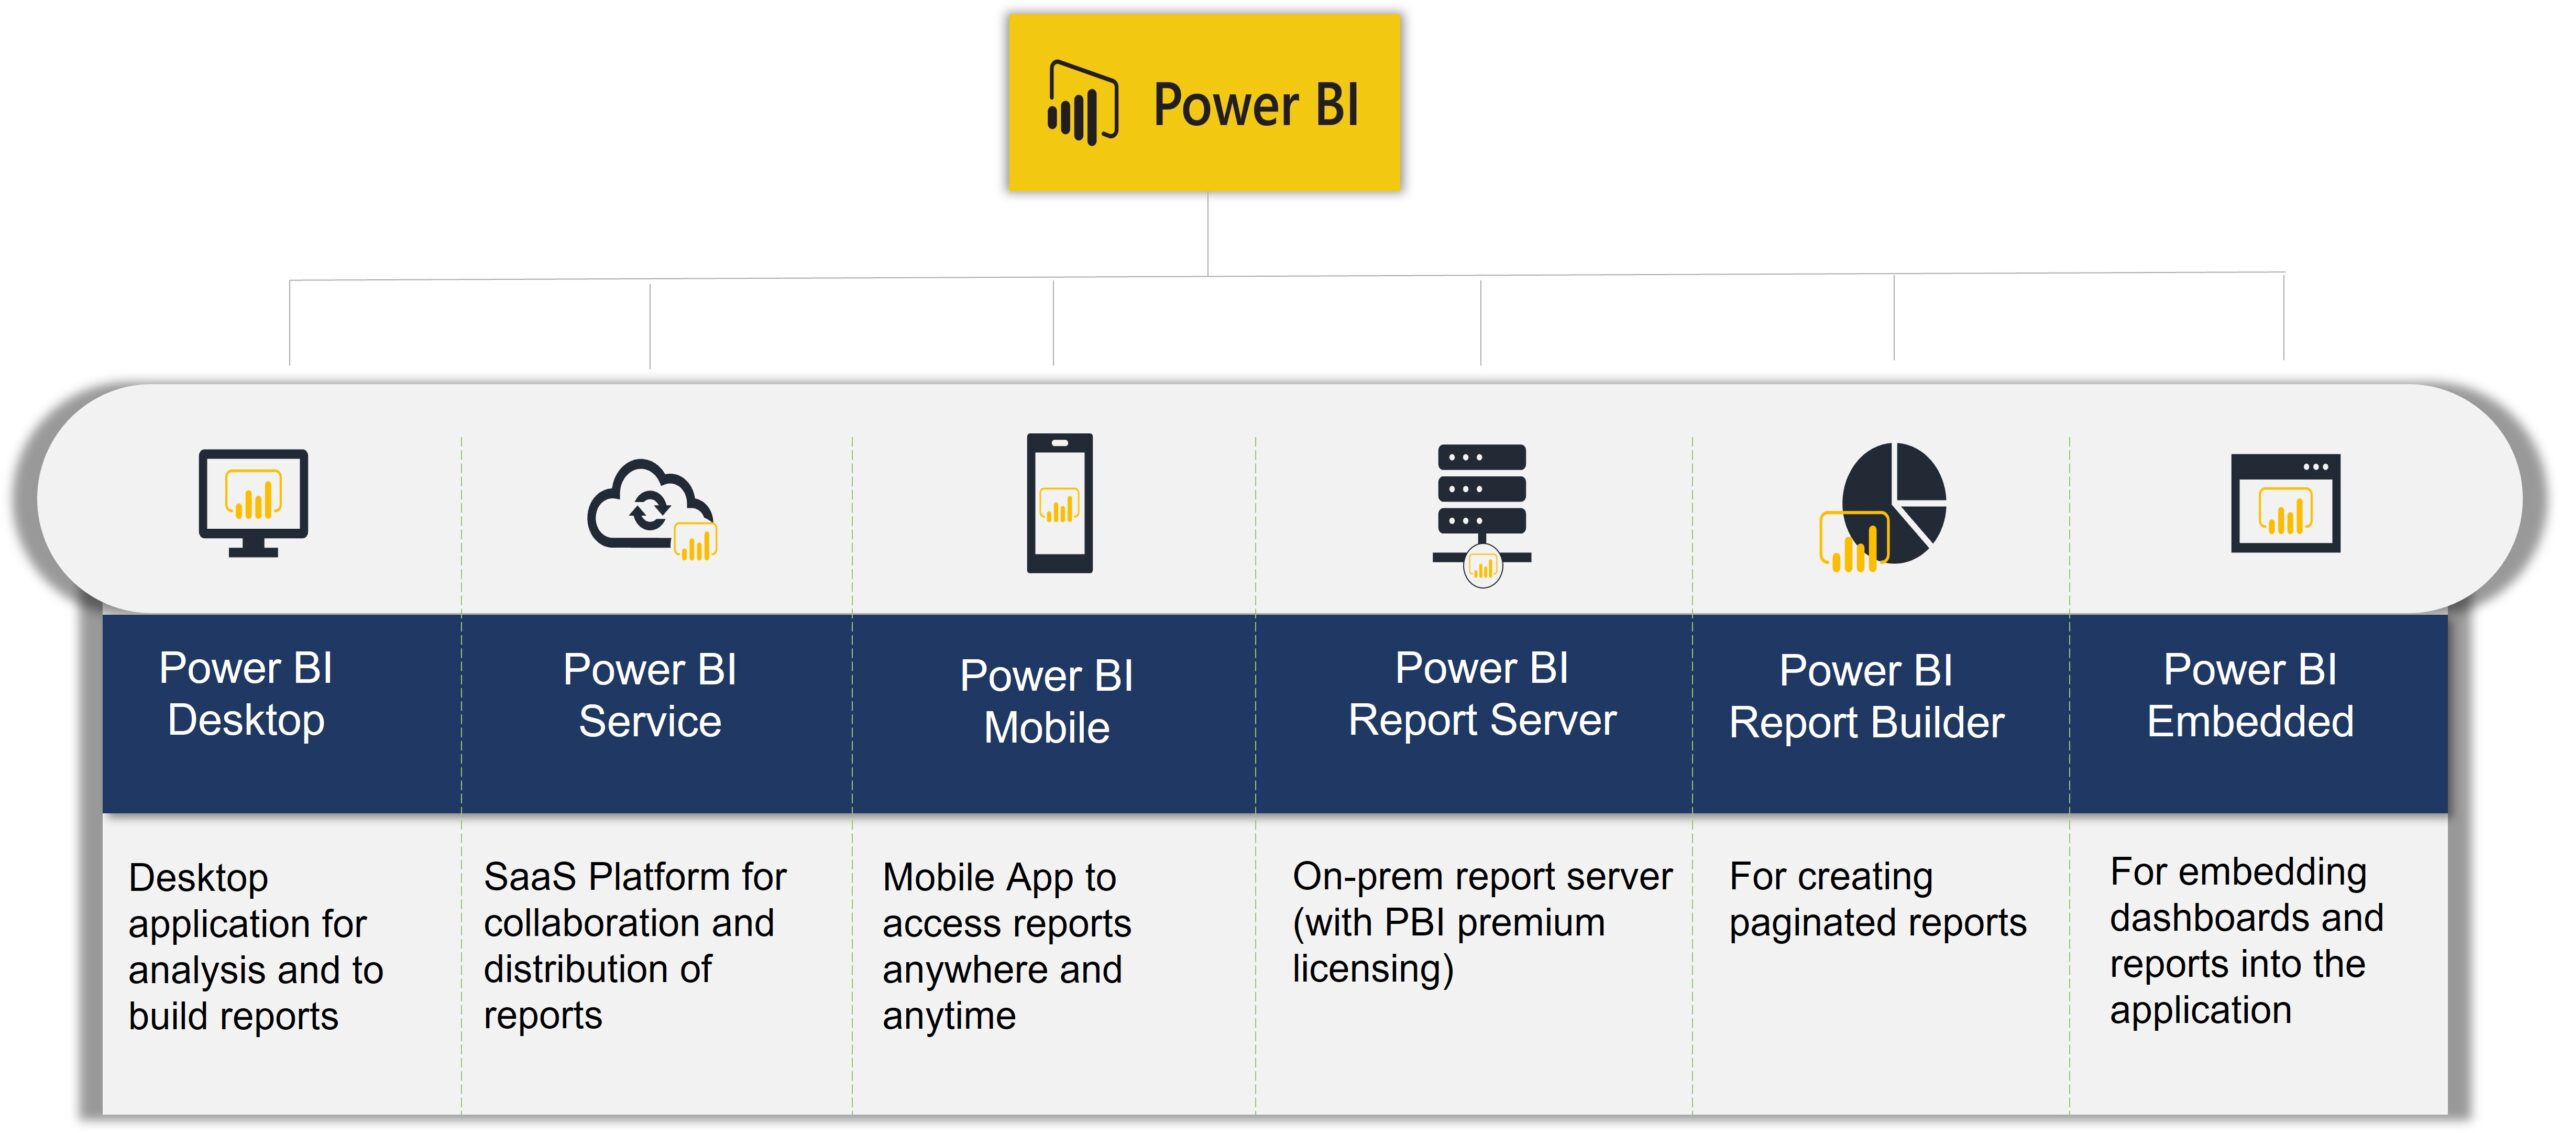 What is Microsoft Power BI?